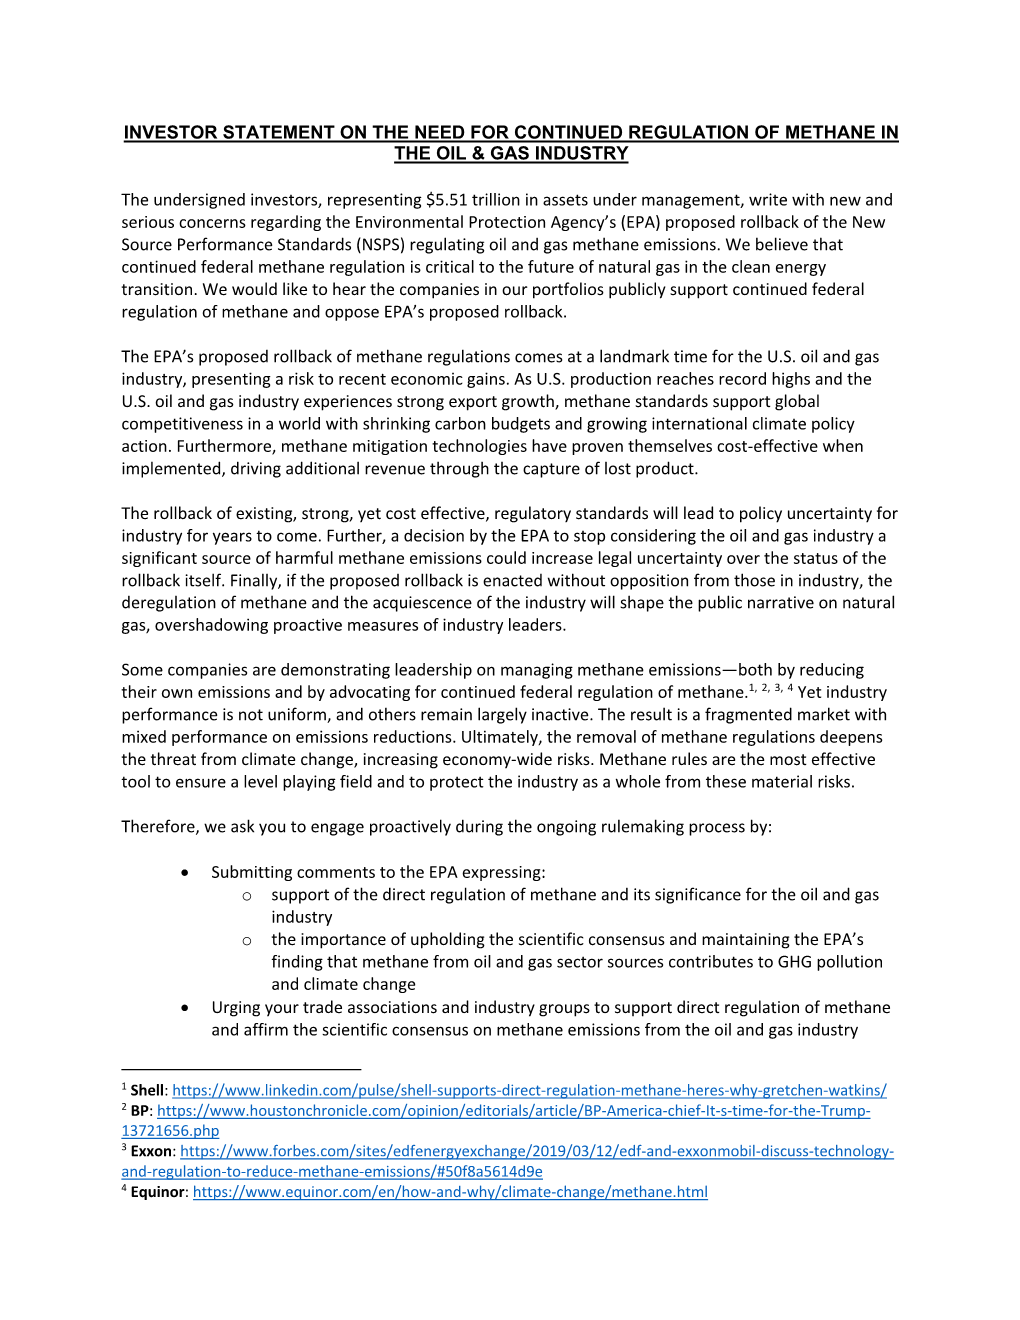 Signatories to the 2019 Investor Statement on Methane Regulation